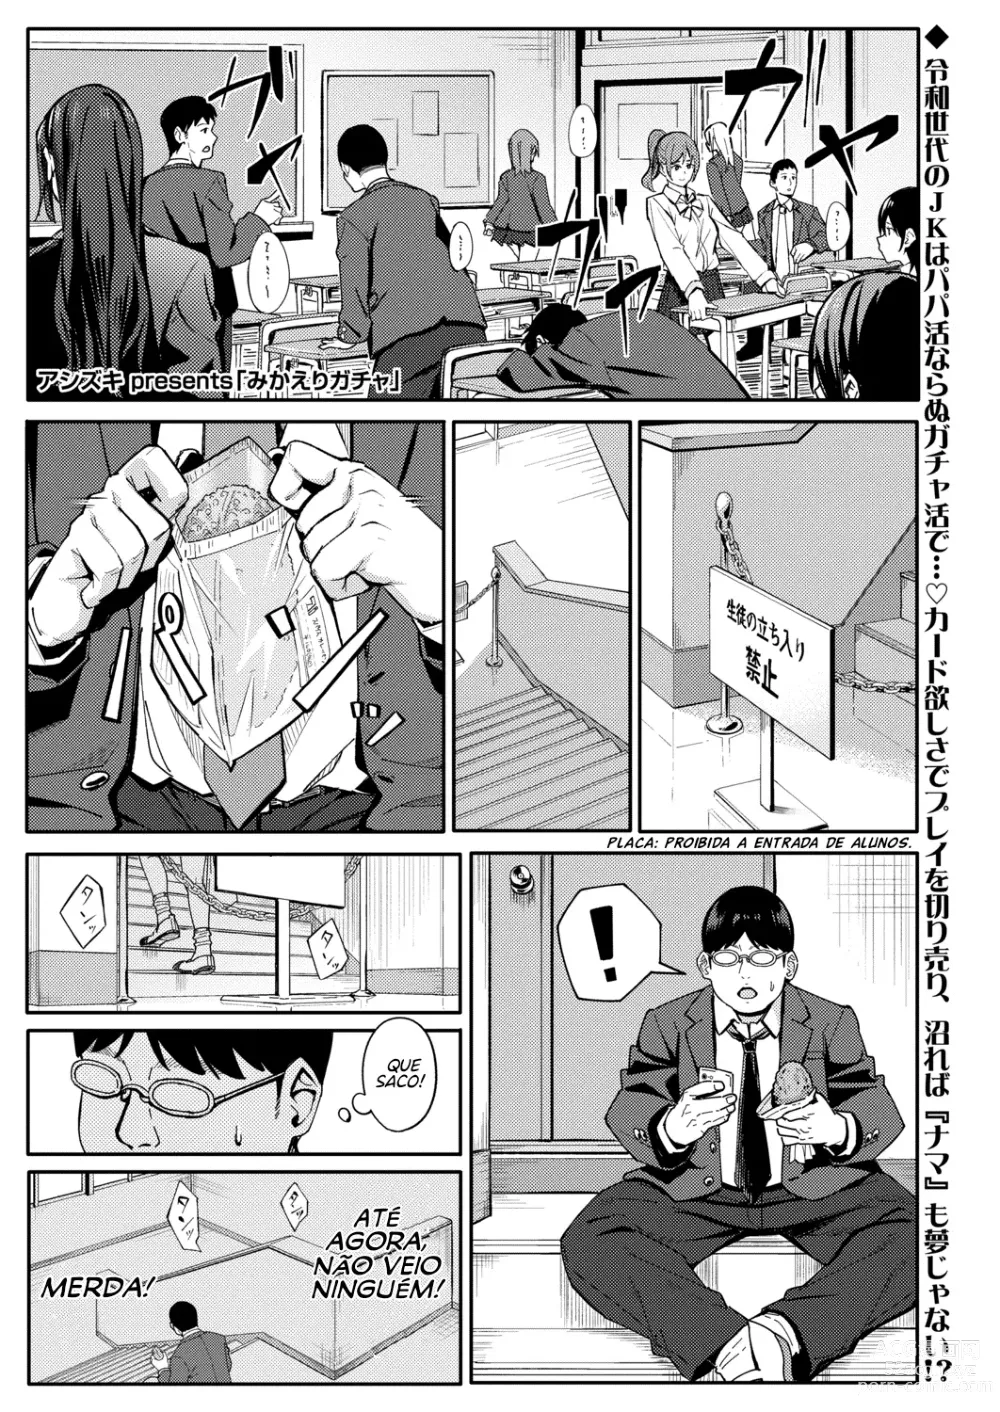 Page 1 of manga Mikaeri Gacha